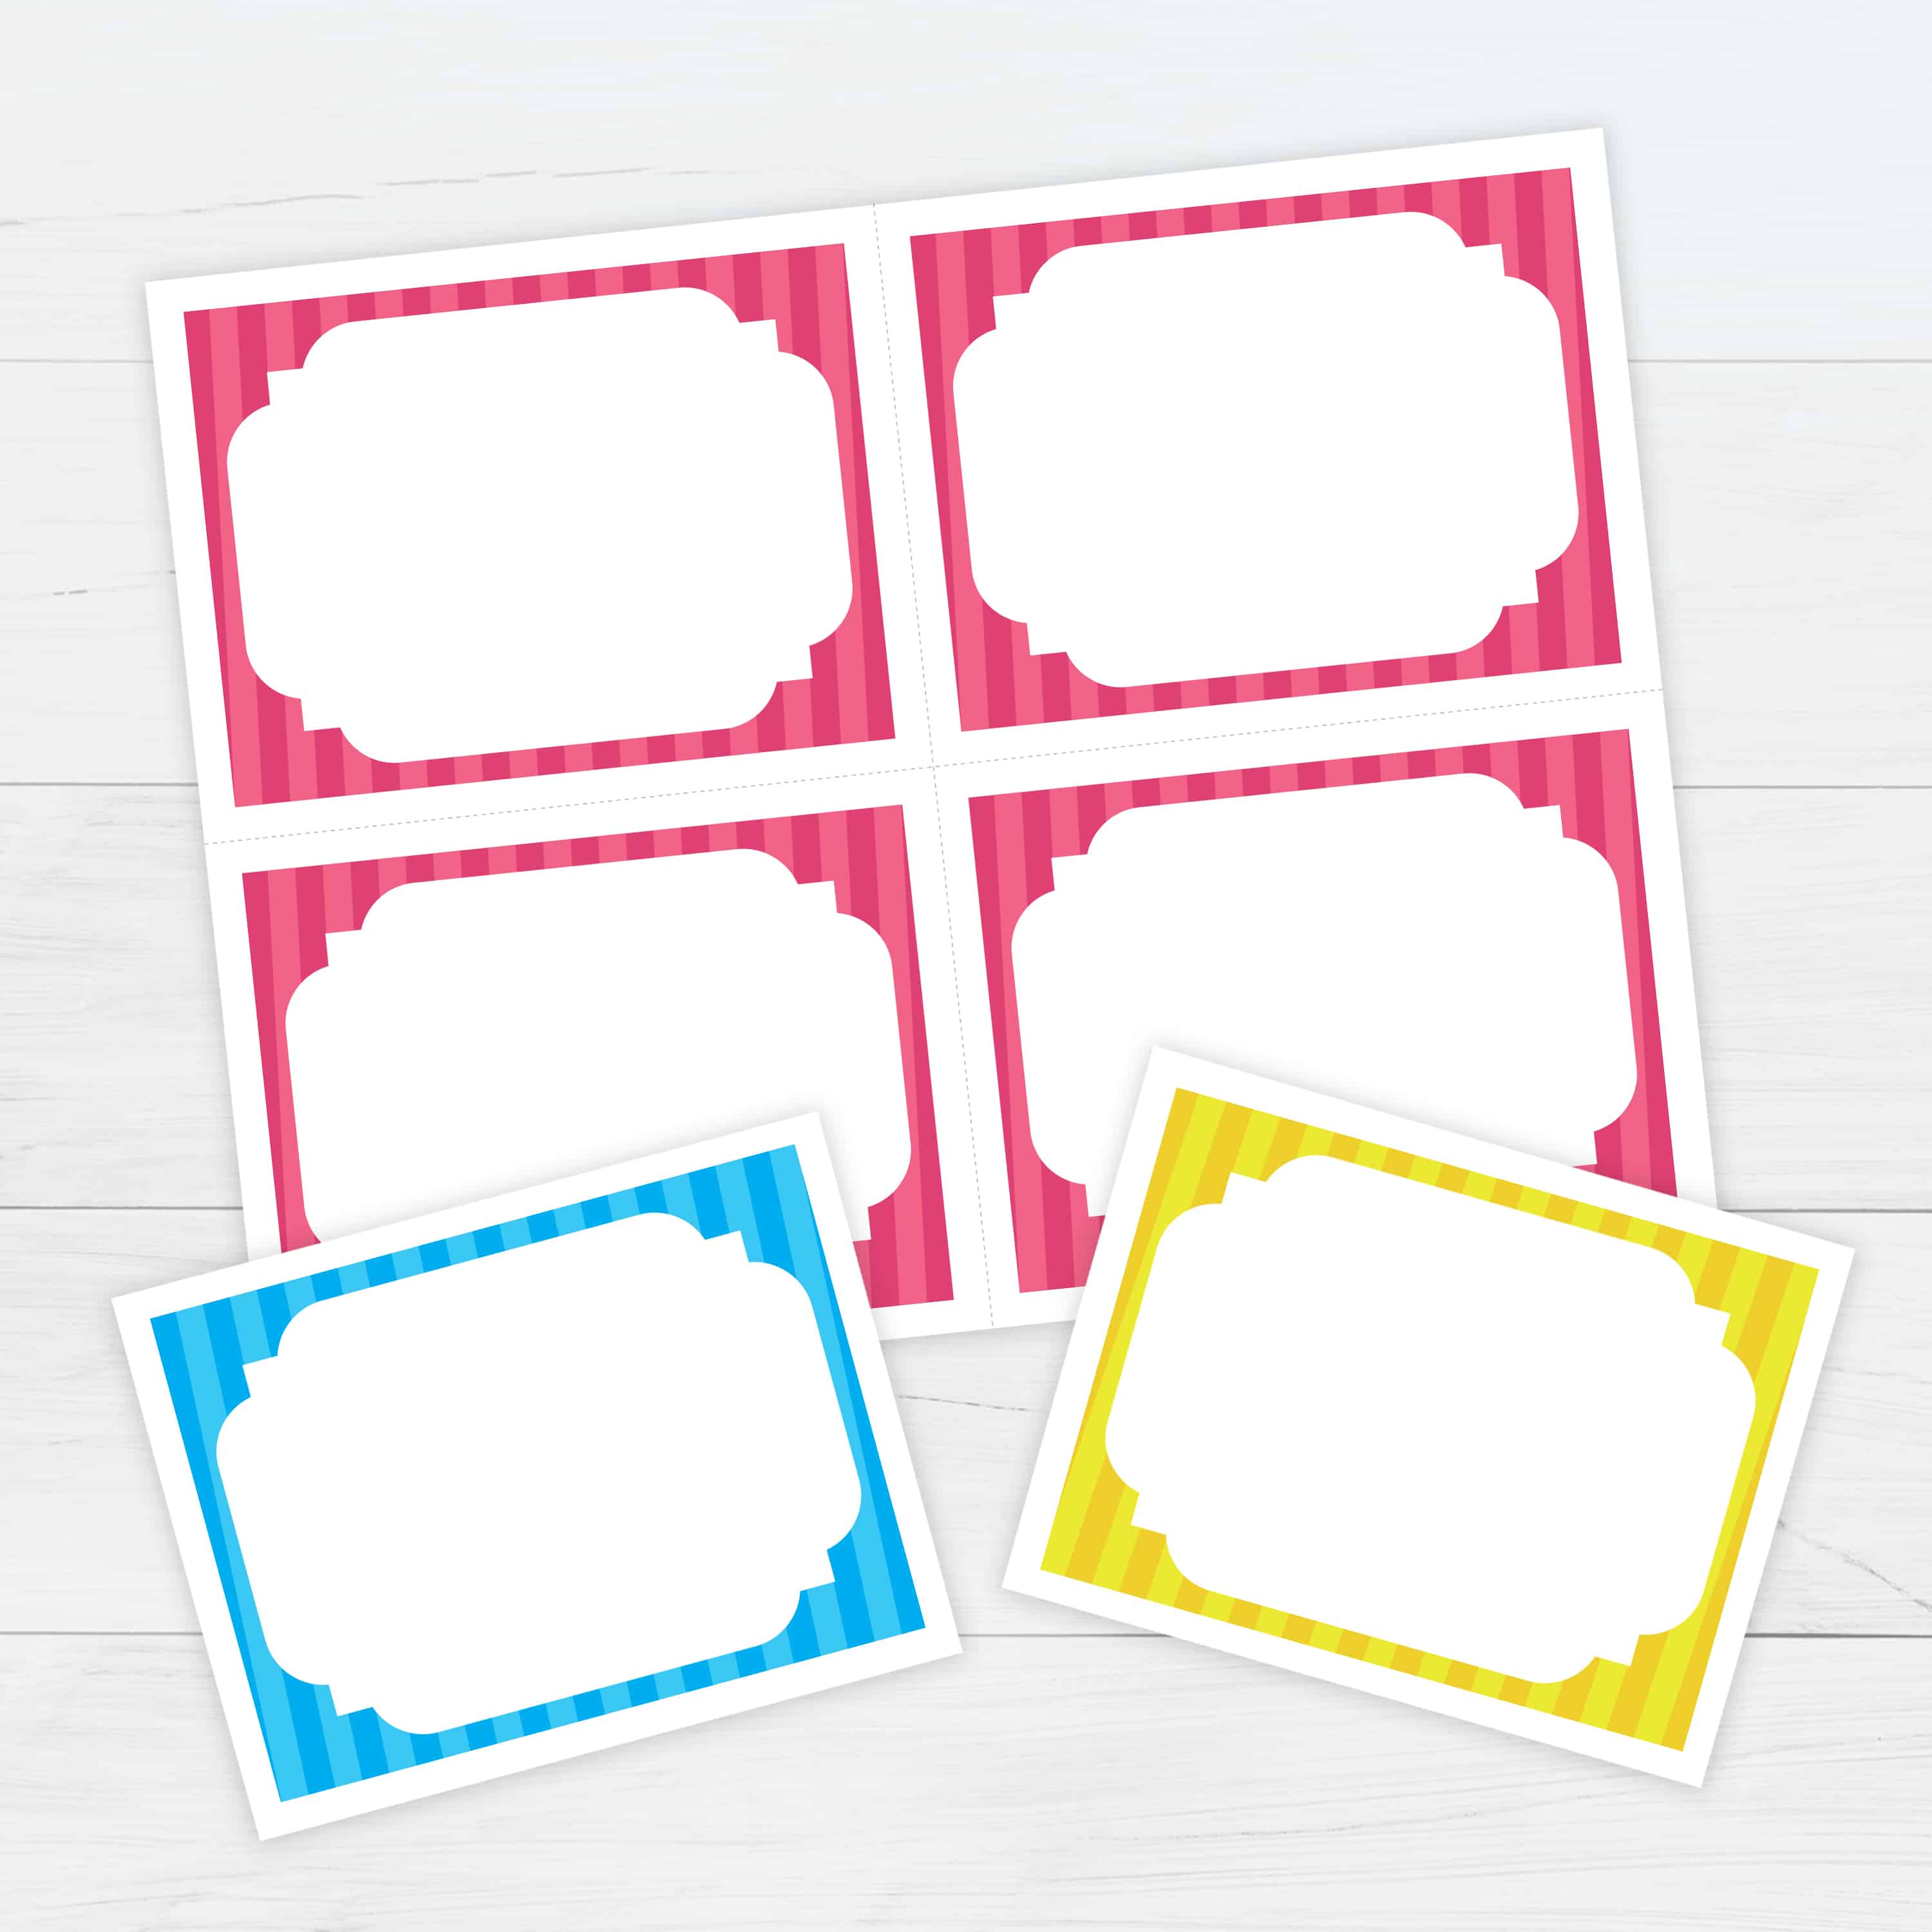 Bordered Flashcards 21 Template - Free Printable Download Regarding Free Printable Flash Cards Template